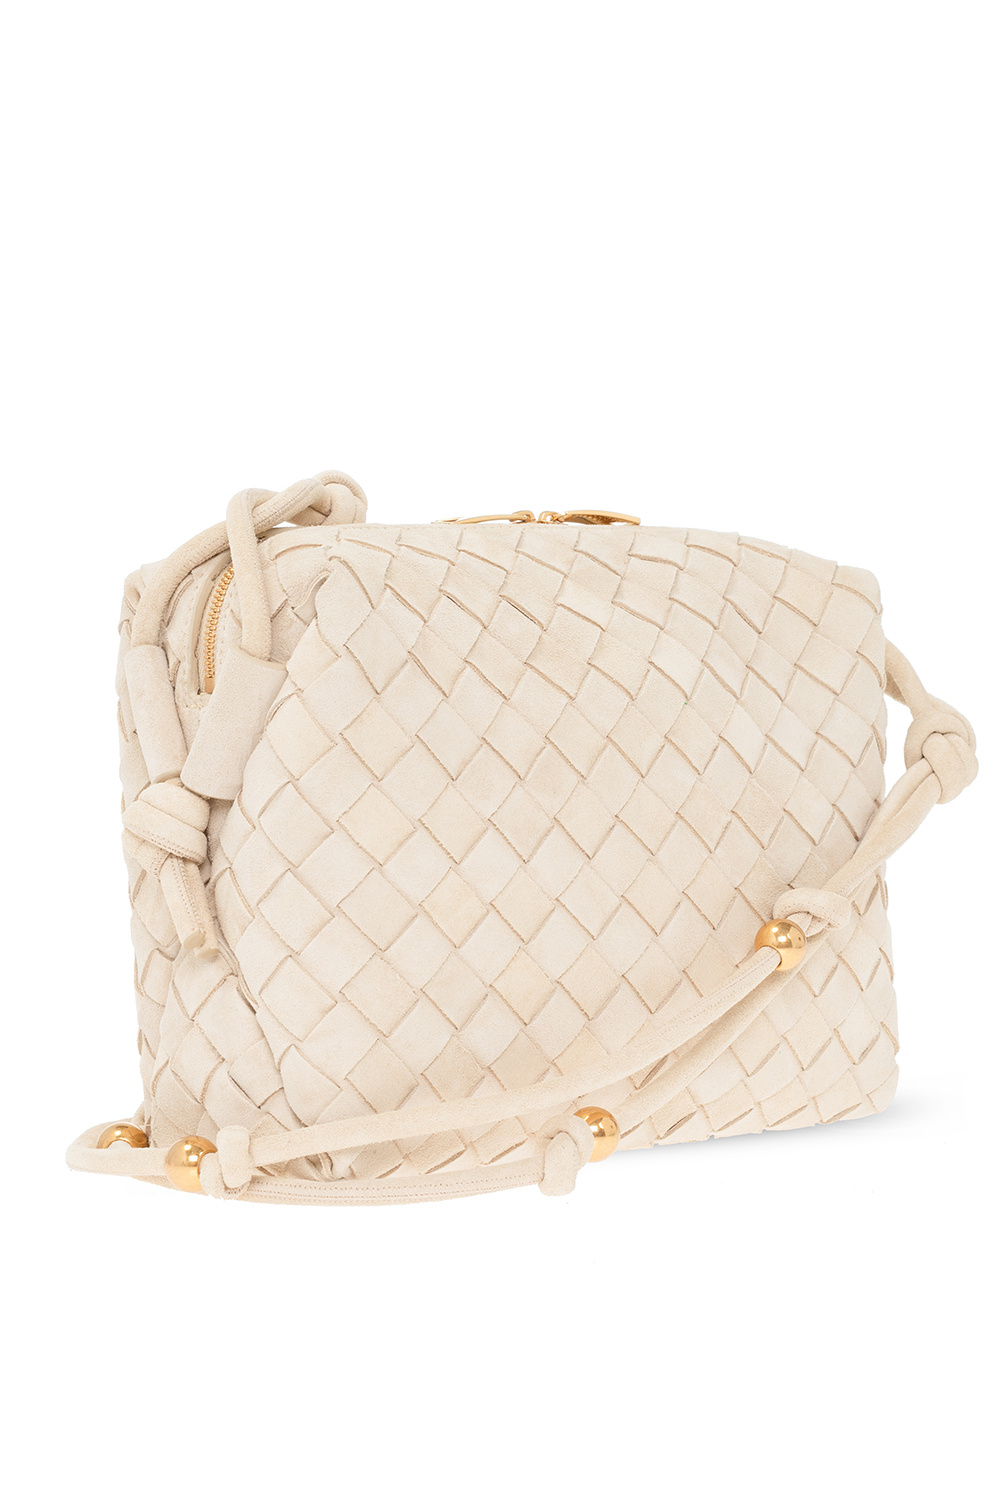 Bottega Veneta ‘Loop Small’ suede shoulder bag